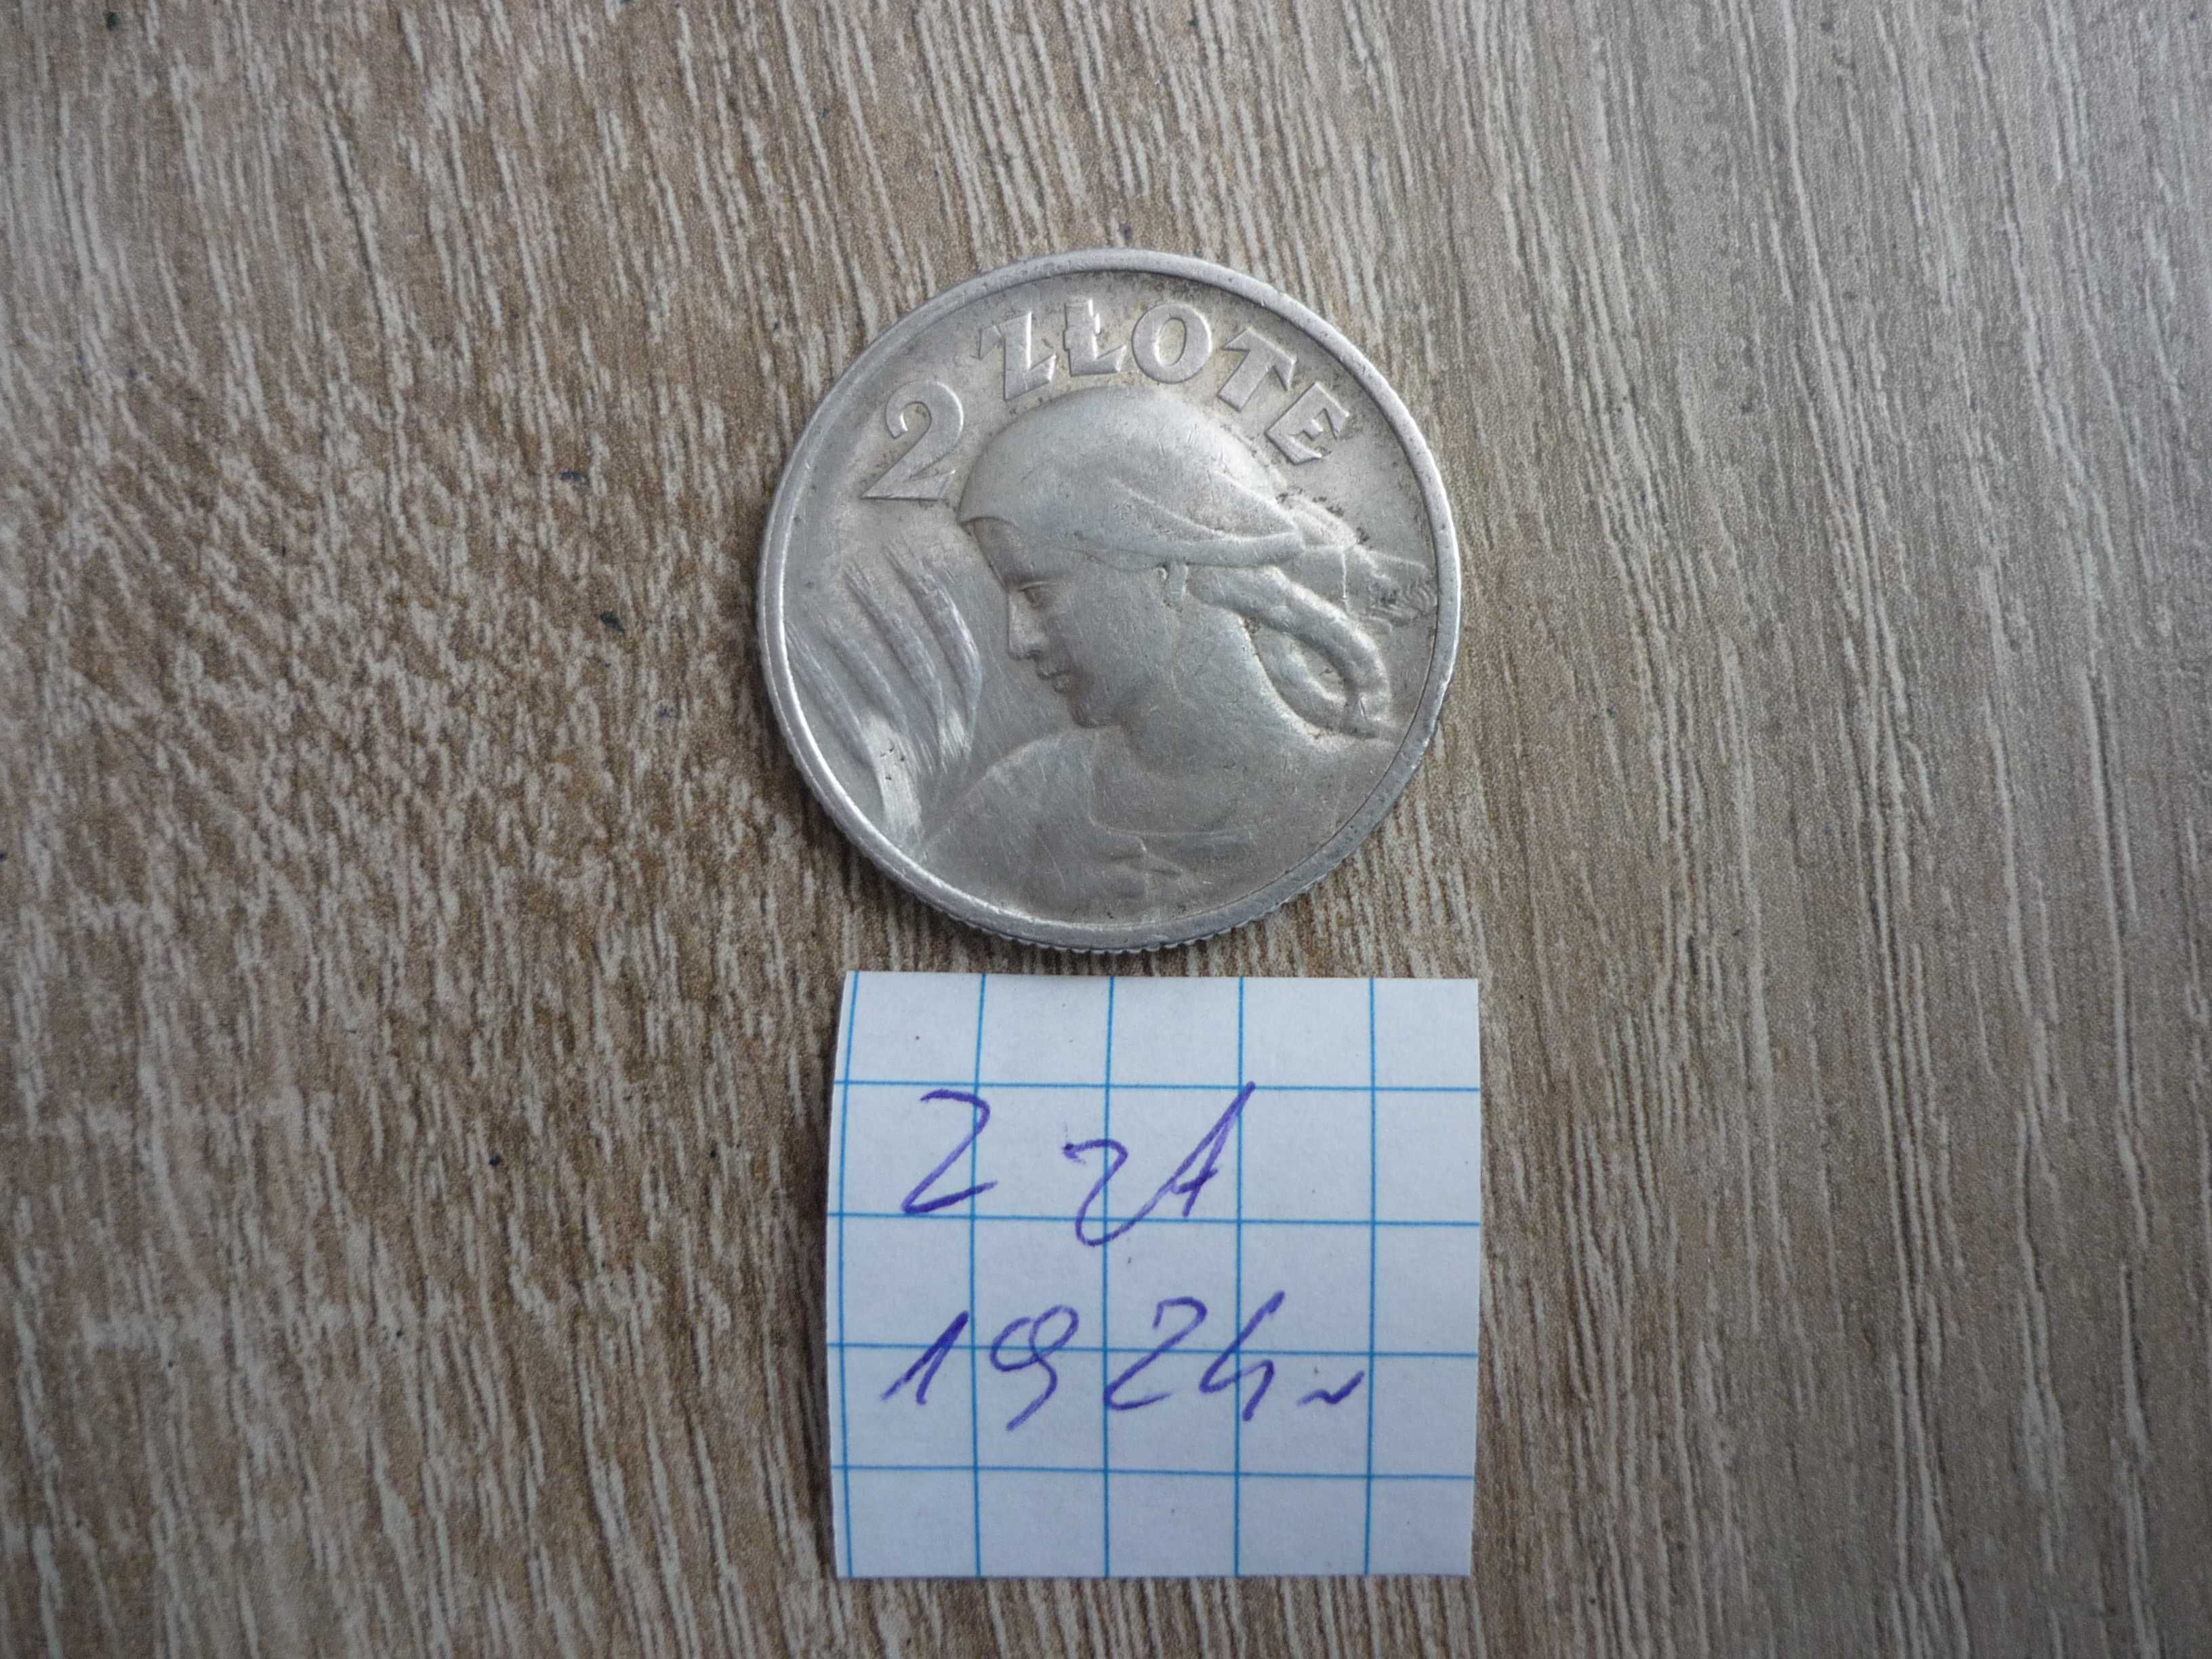 Moneta 2 złote 1924 r. Polska srebro oryginał